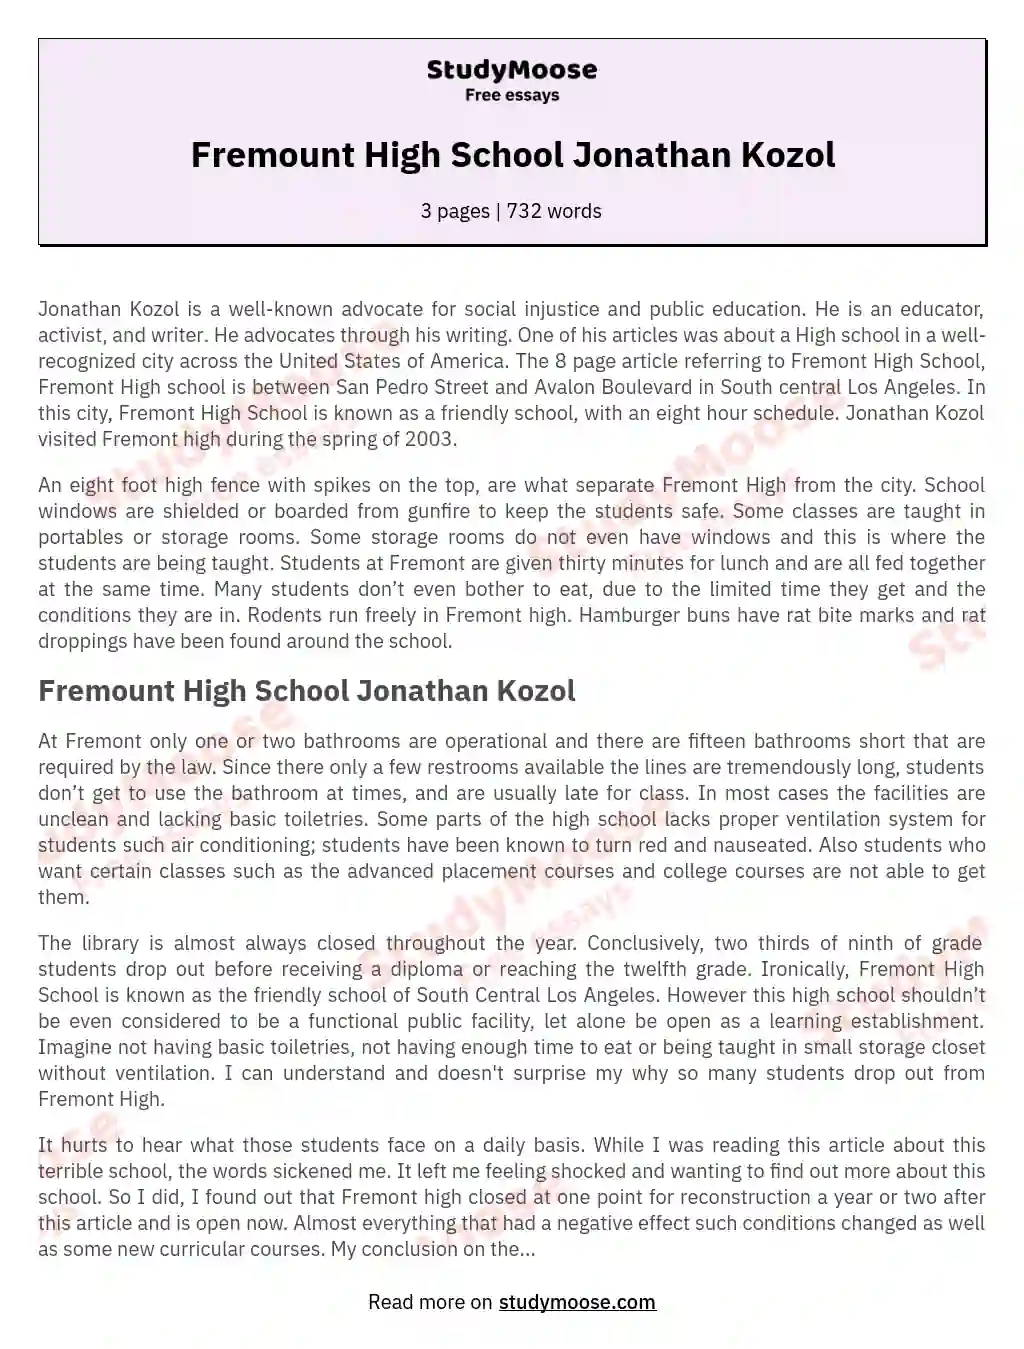 Fremount High School Jonathan Kozol essay